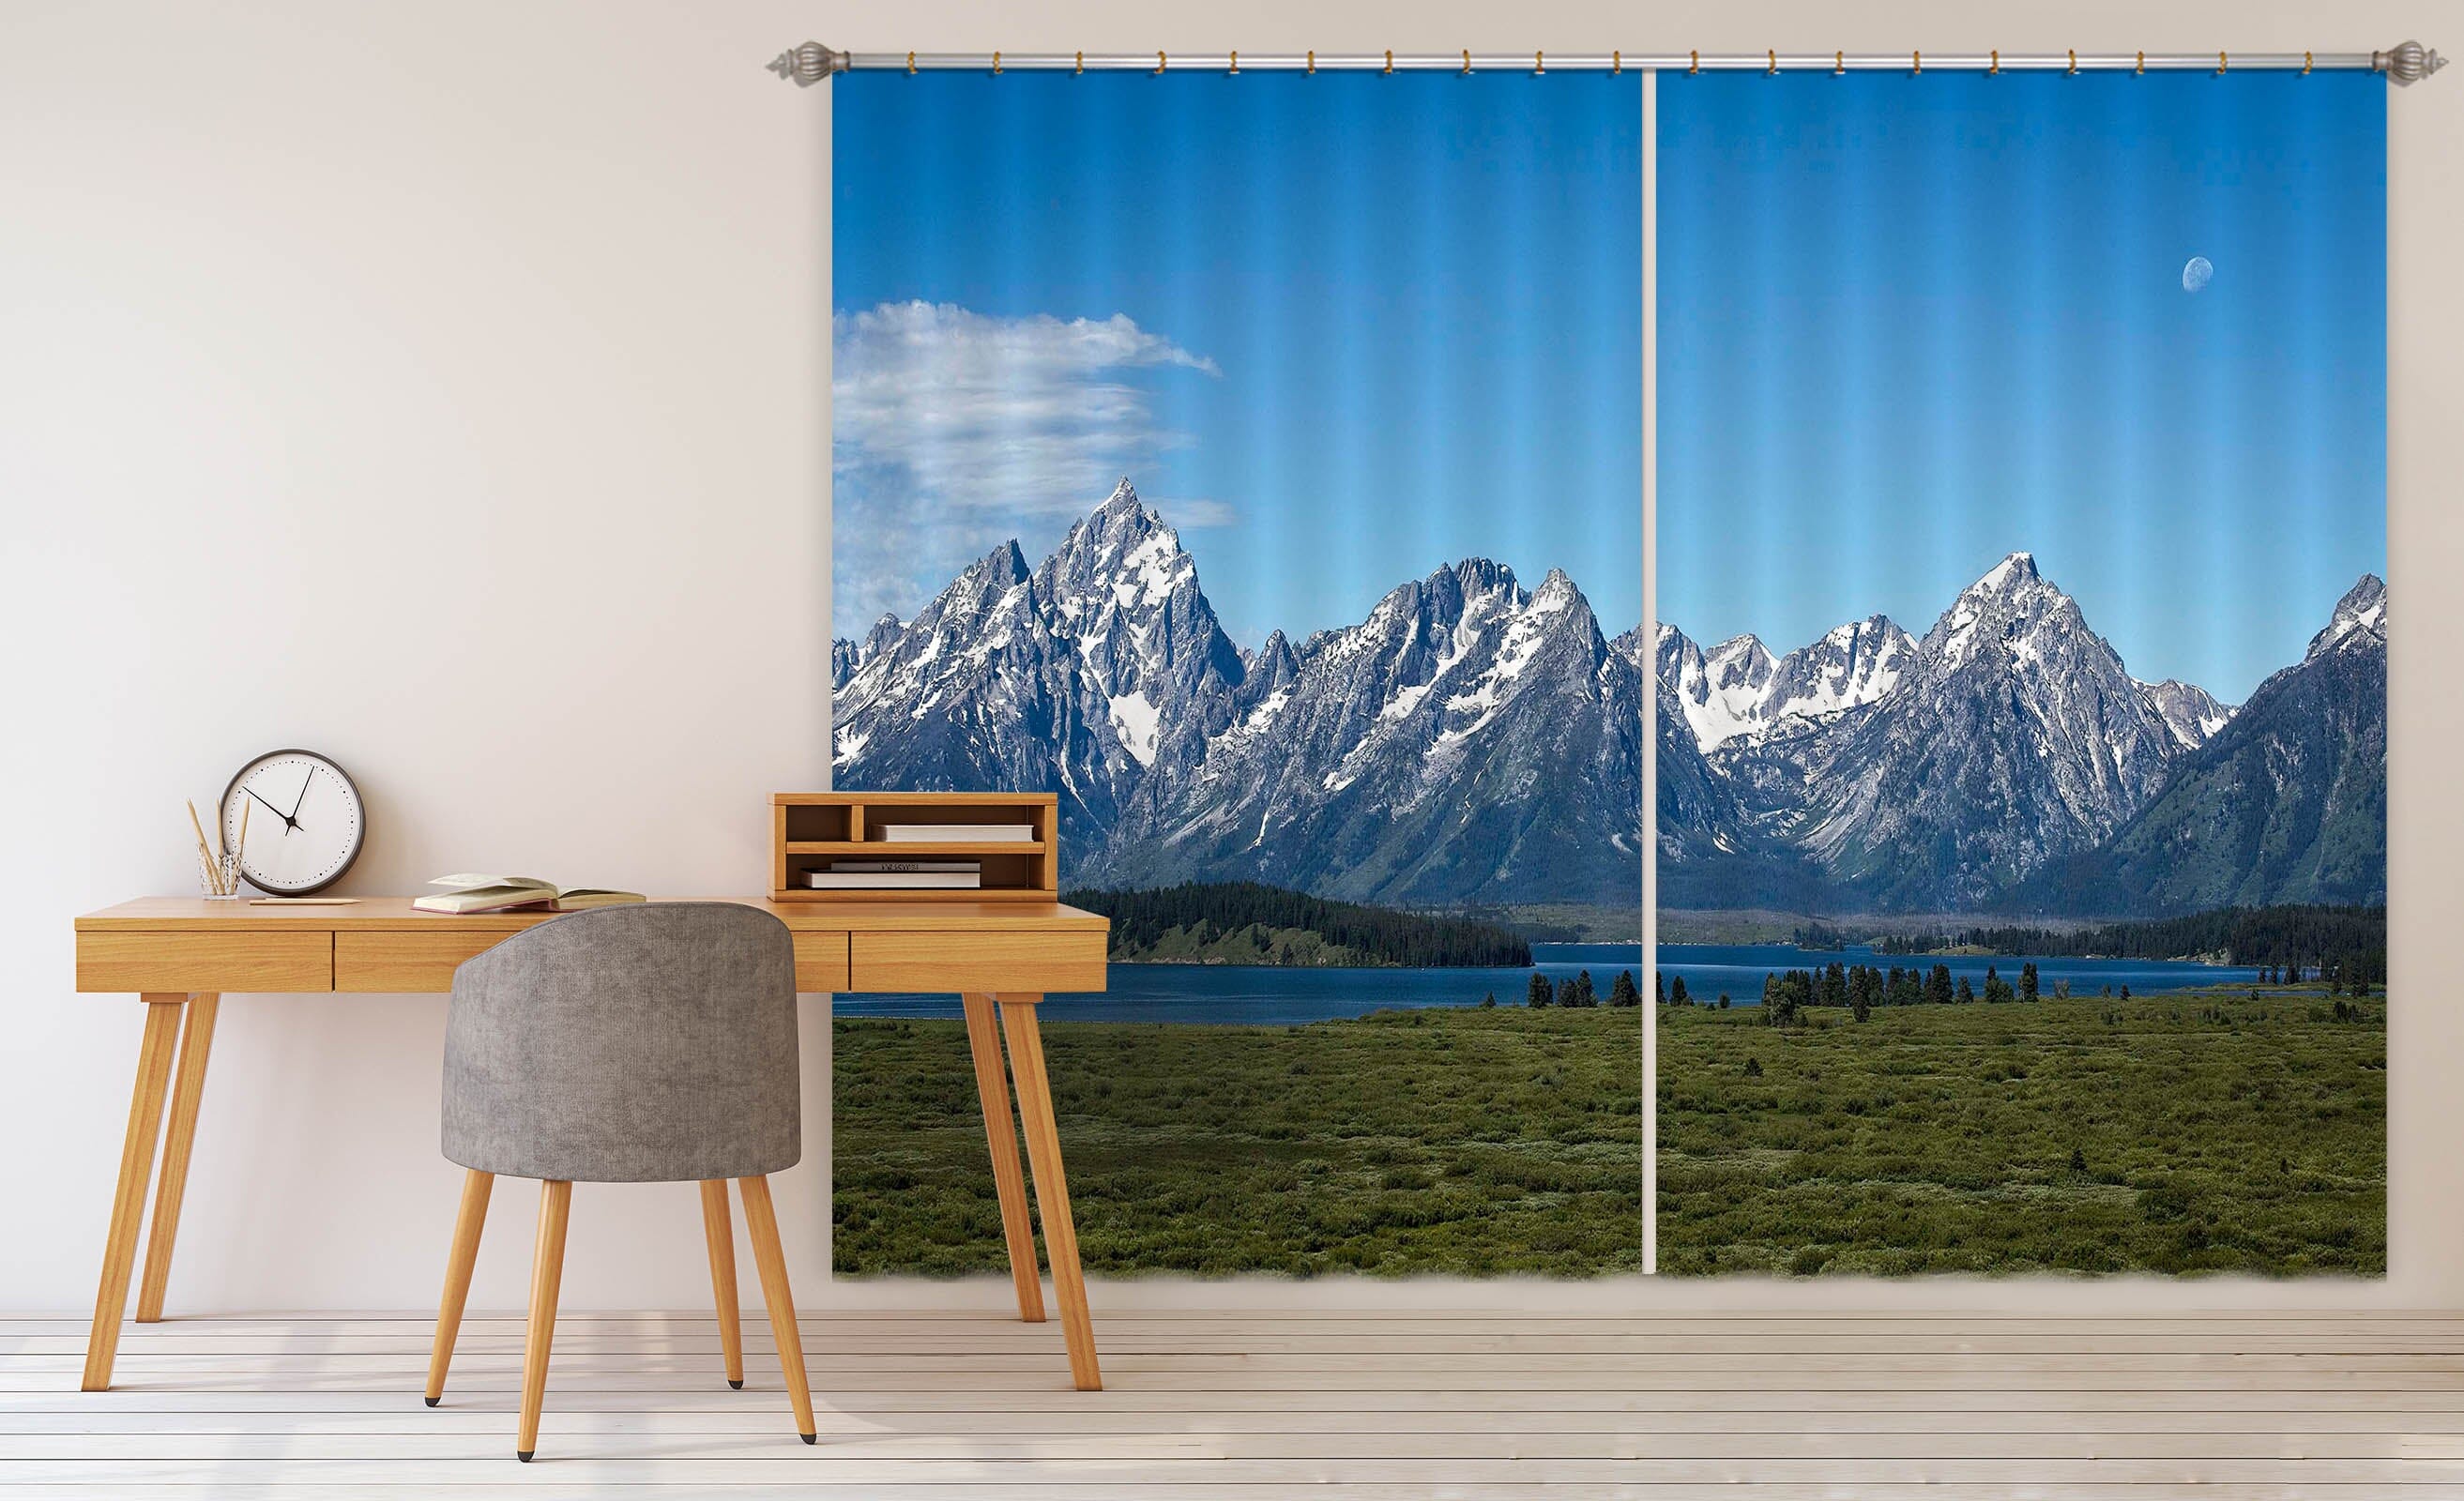 3D Distant Mountains 061 Kathy Barefield Curtain Curtains Drapes Curtains AJ Creativity Home 